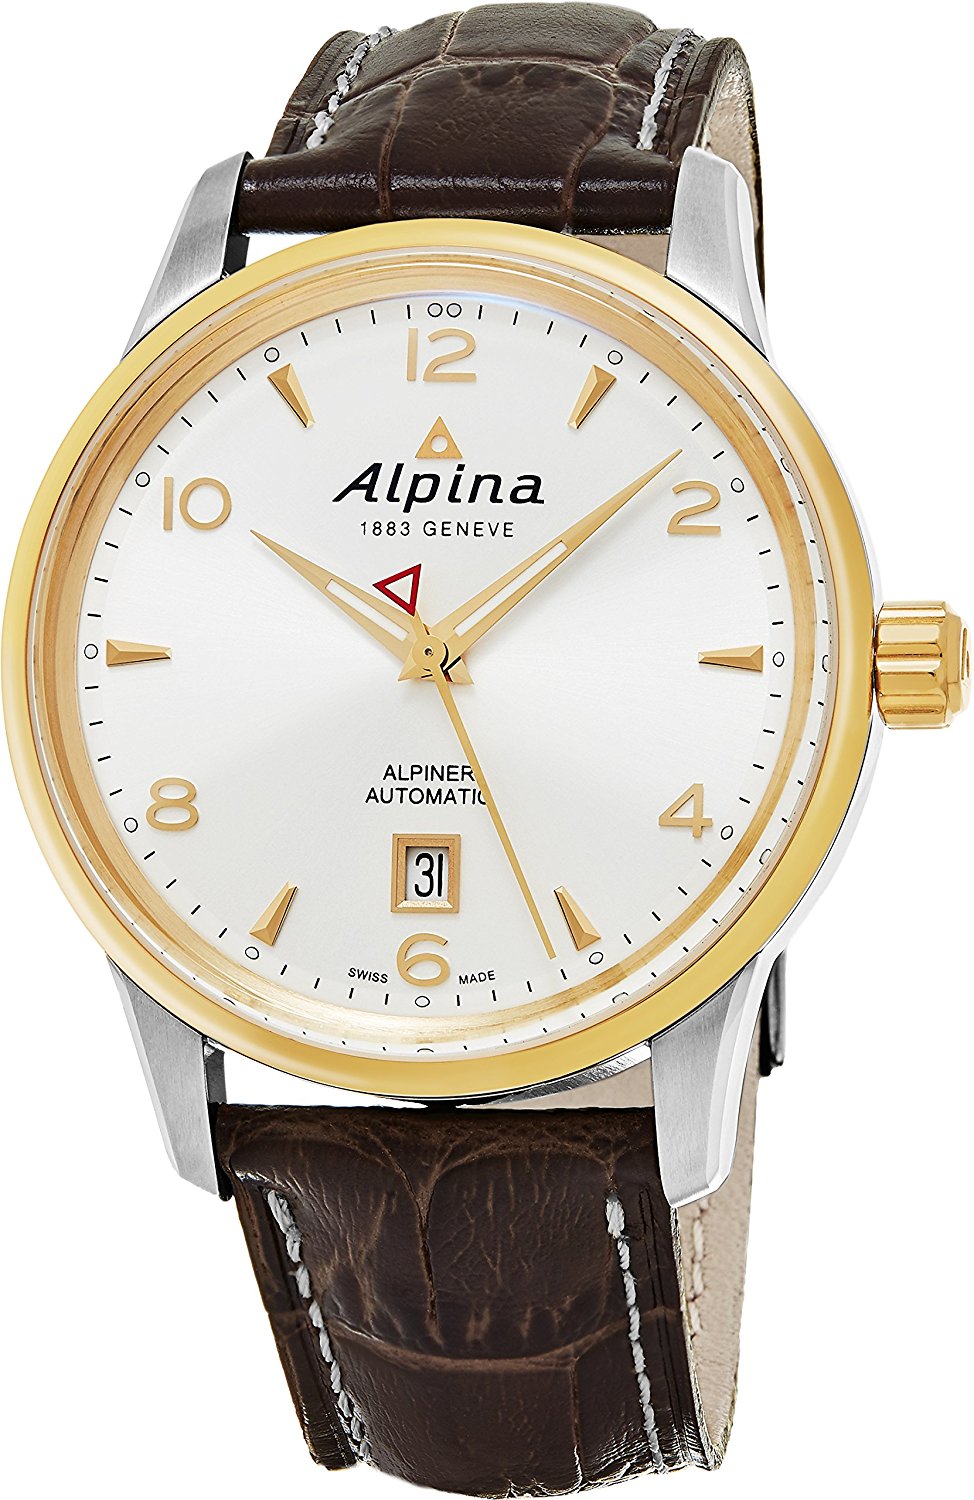 Alpina часы. Часы Alpina al525. Часы Alpina al372x4s26. Часы Alpina al 525 мужские. Наручные часы Alpina al-372n4fbs6.